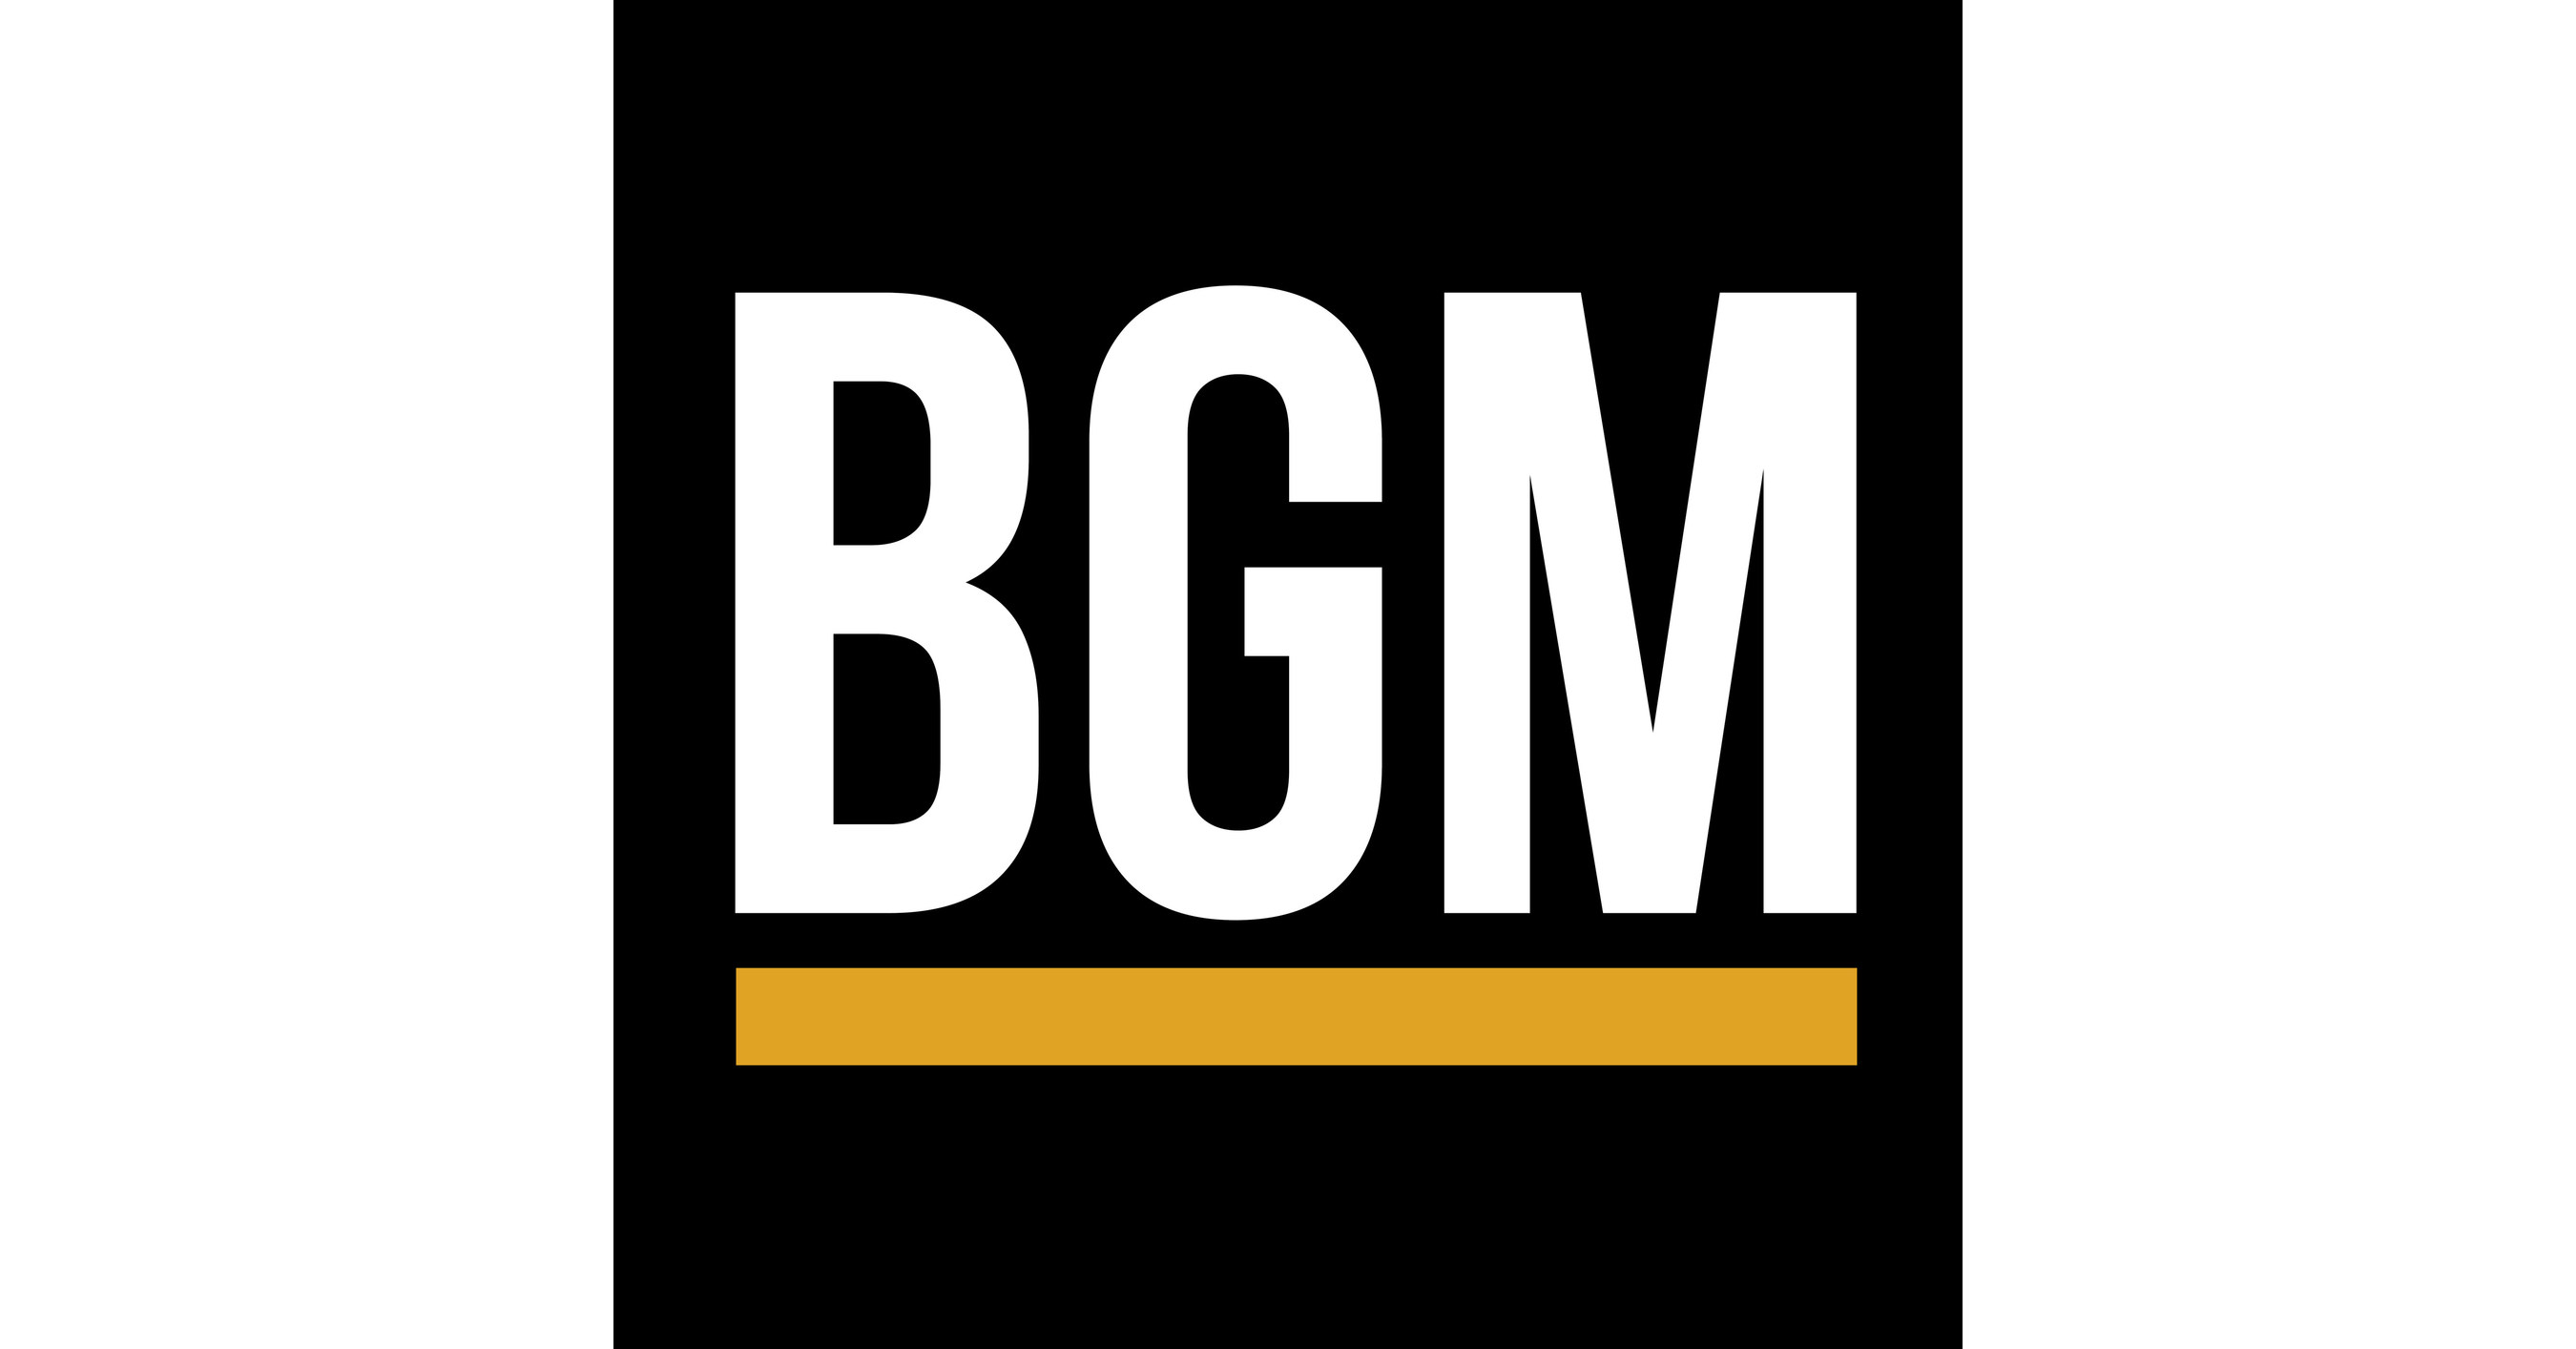 Bgm Extends Mineralized Horizon By 2 5 Kilometers